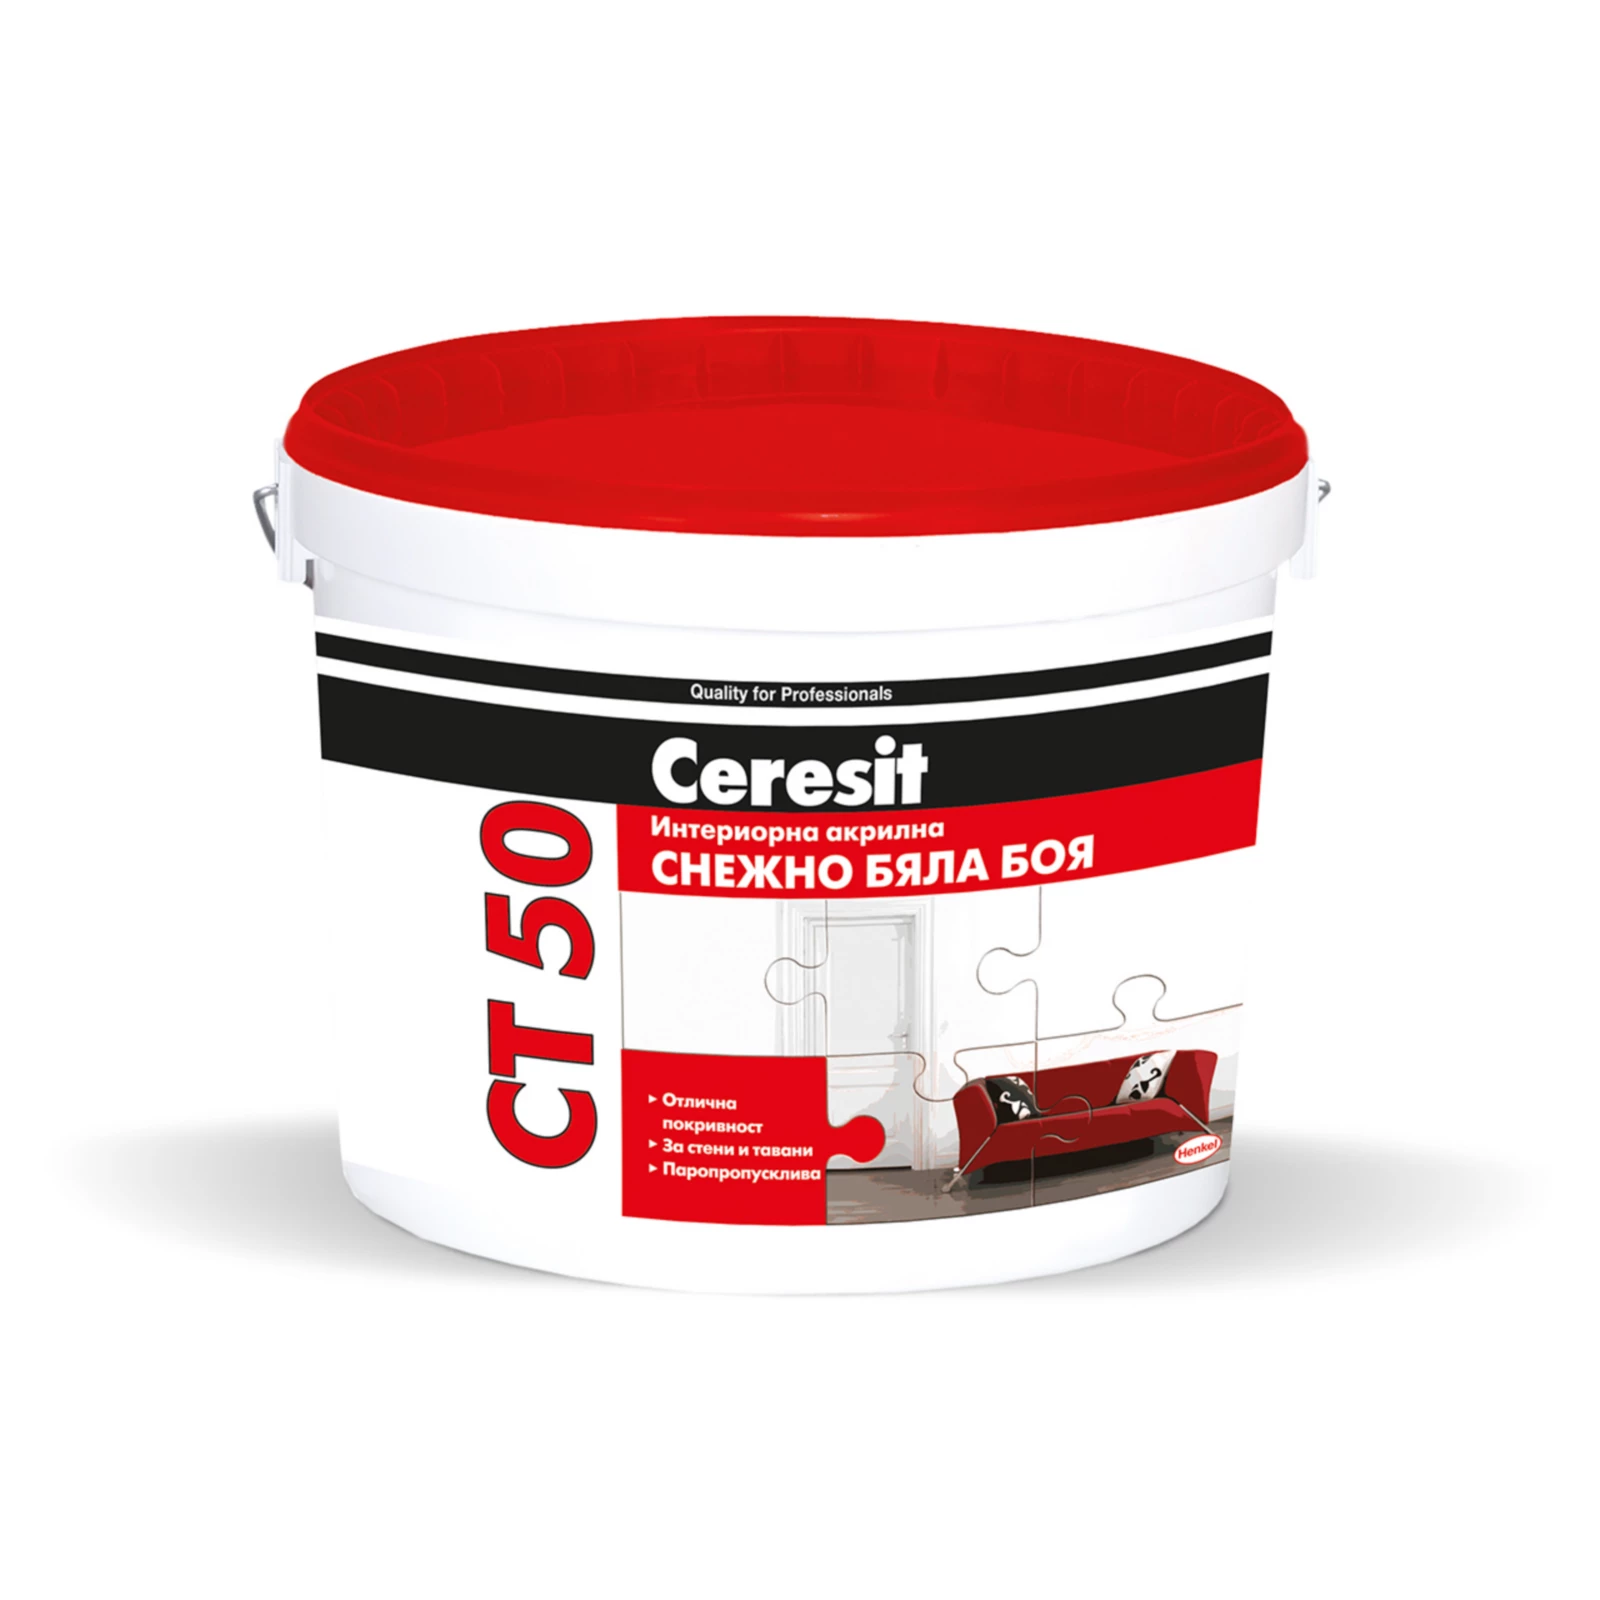 Ceresit Ct50 Ακρυλικό Χρώμα Λευκό Ματ 10l